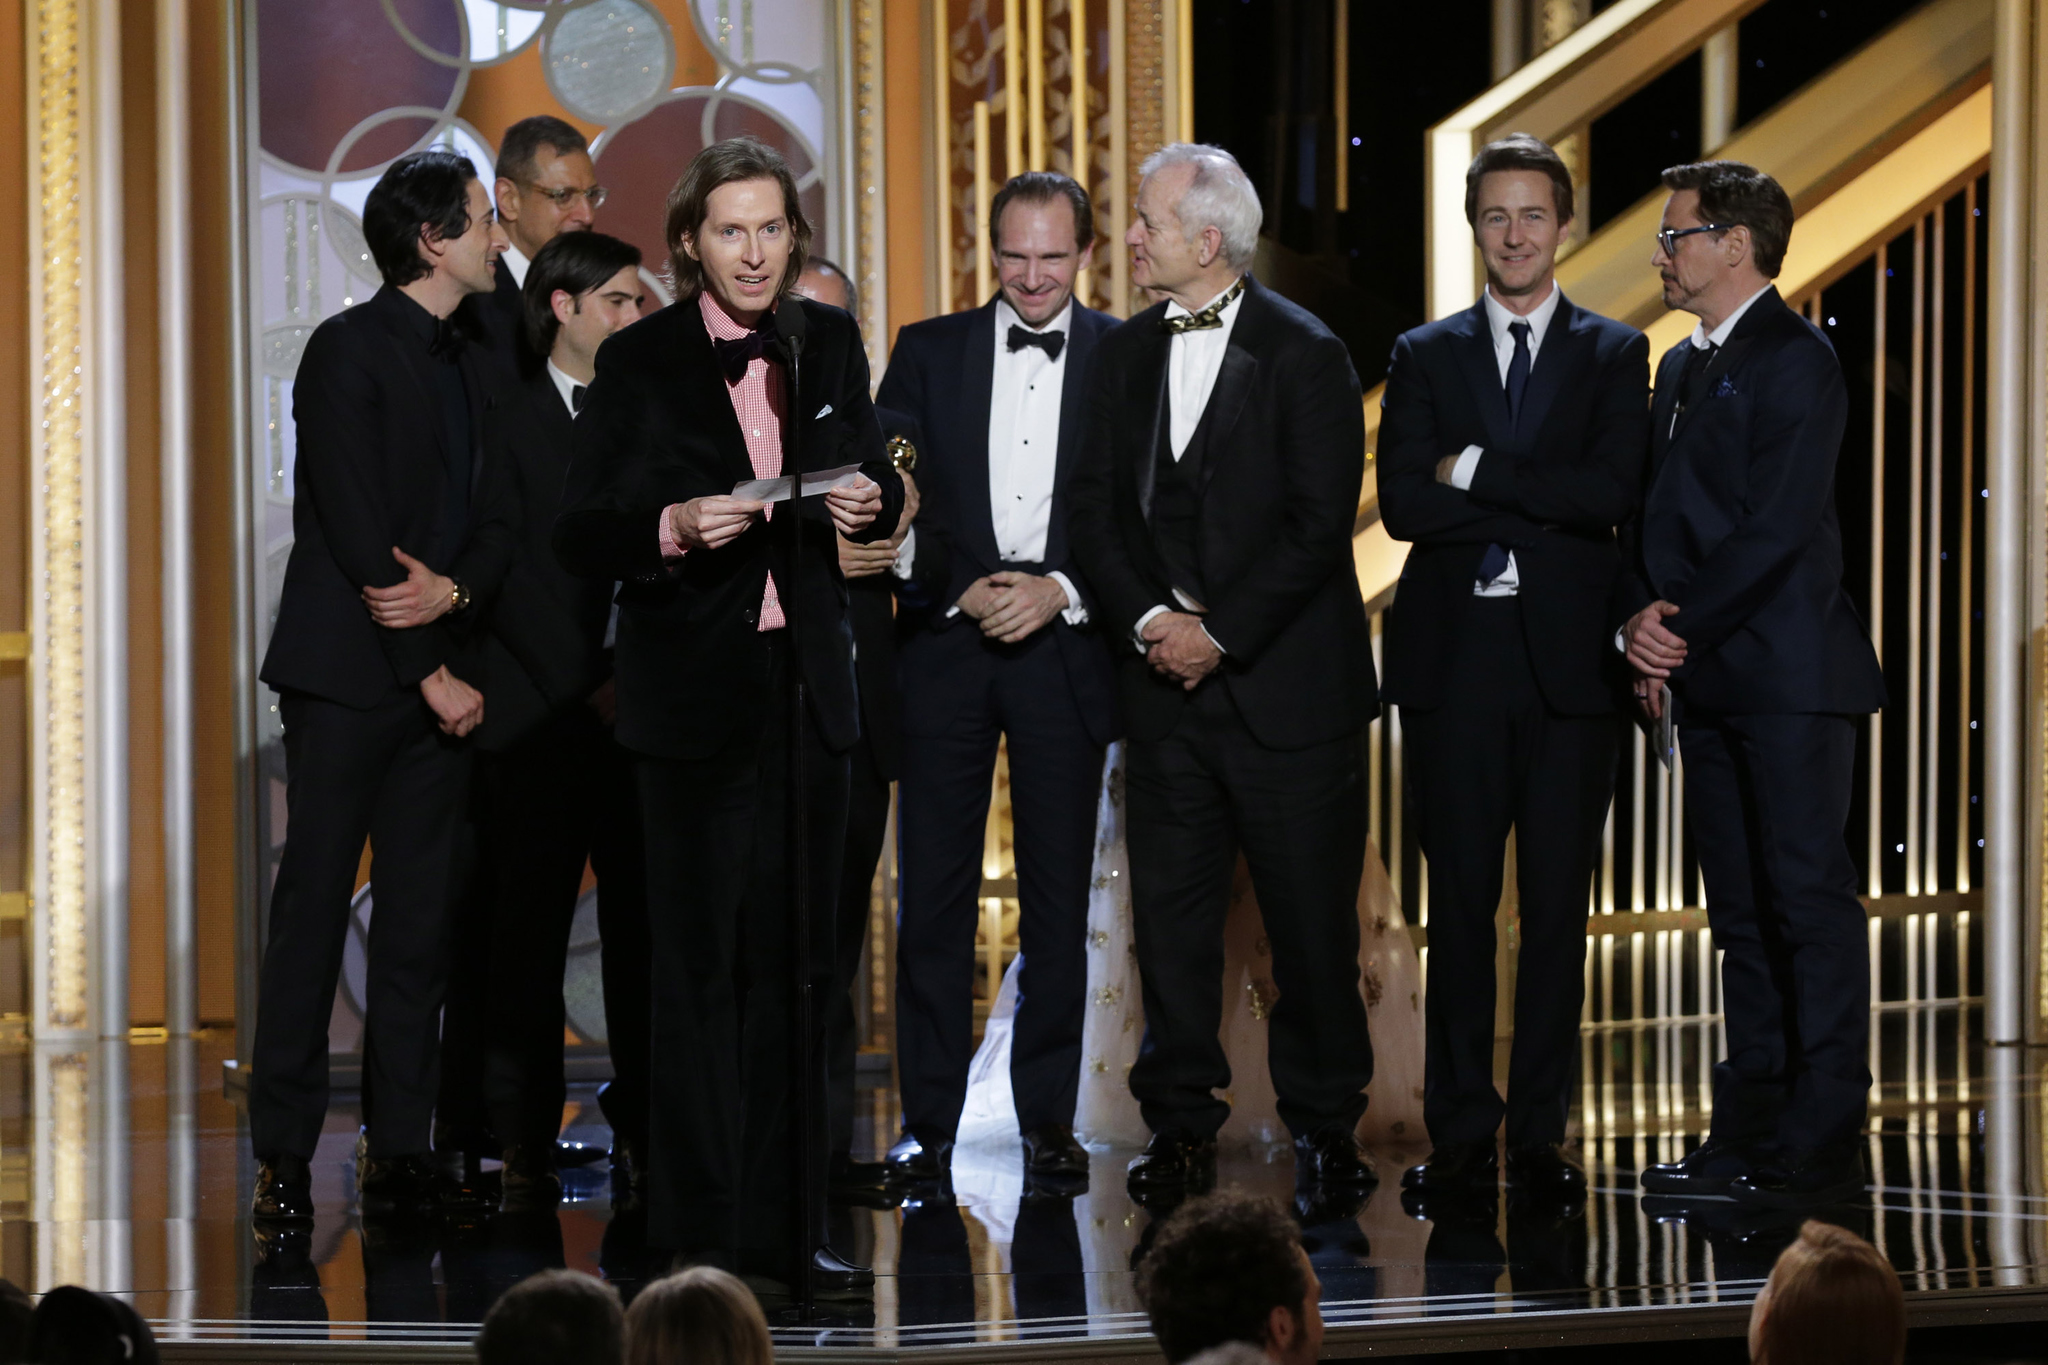 Ralph Fiennes, Jeff Goldblum, Bill Murray, Robert Downey Jr., Edward Norton, Adrien Brody, Jason Schwartzman and Wes Anderson at event of The 72nd Annual Golden Globe Awards (2015)